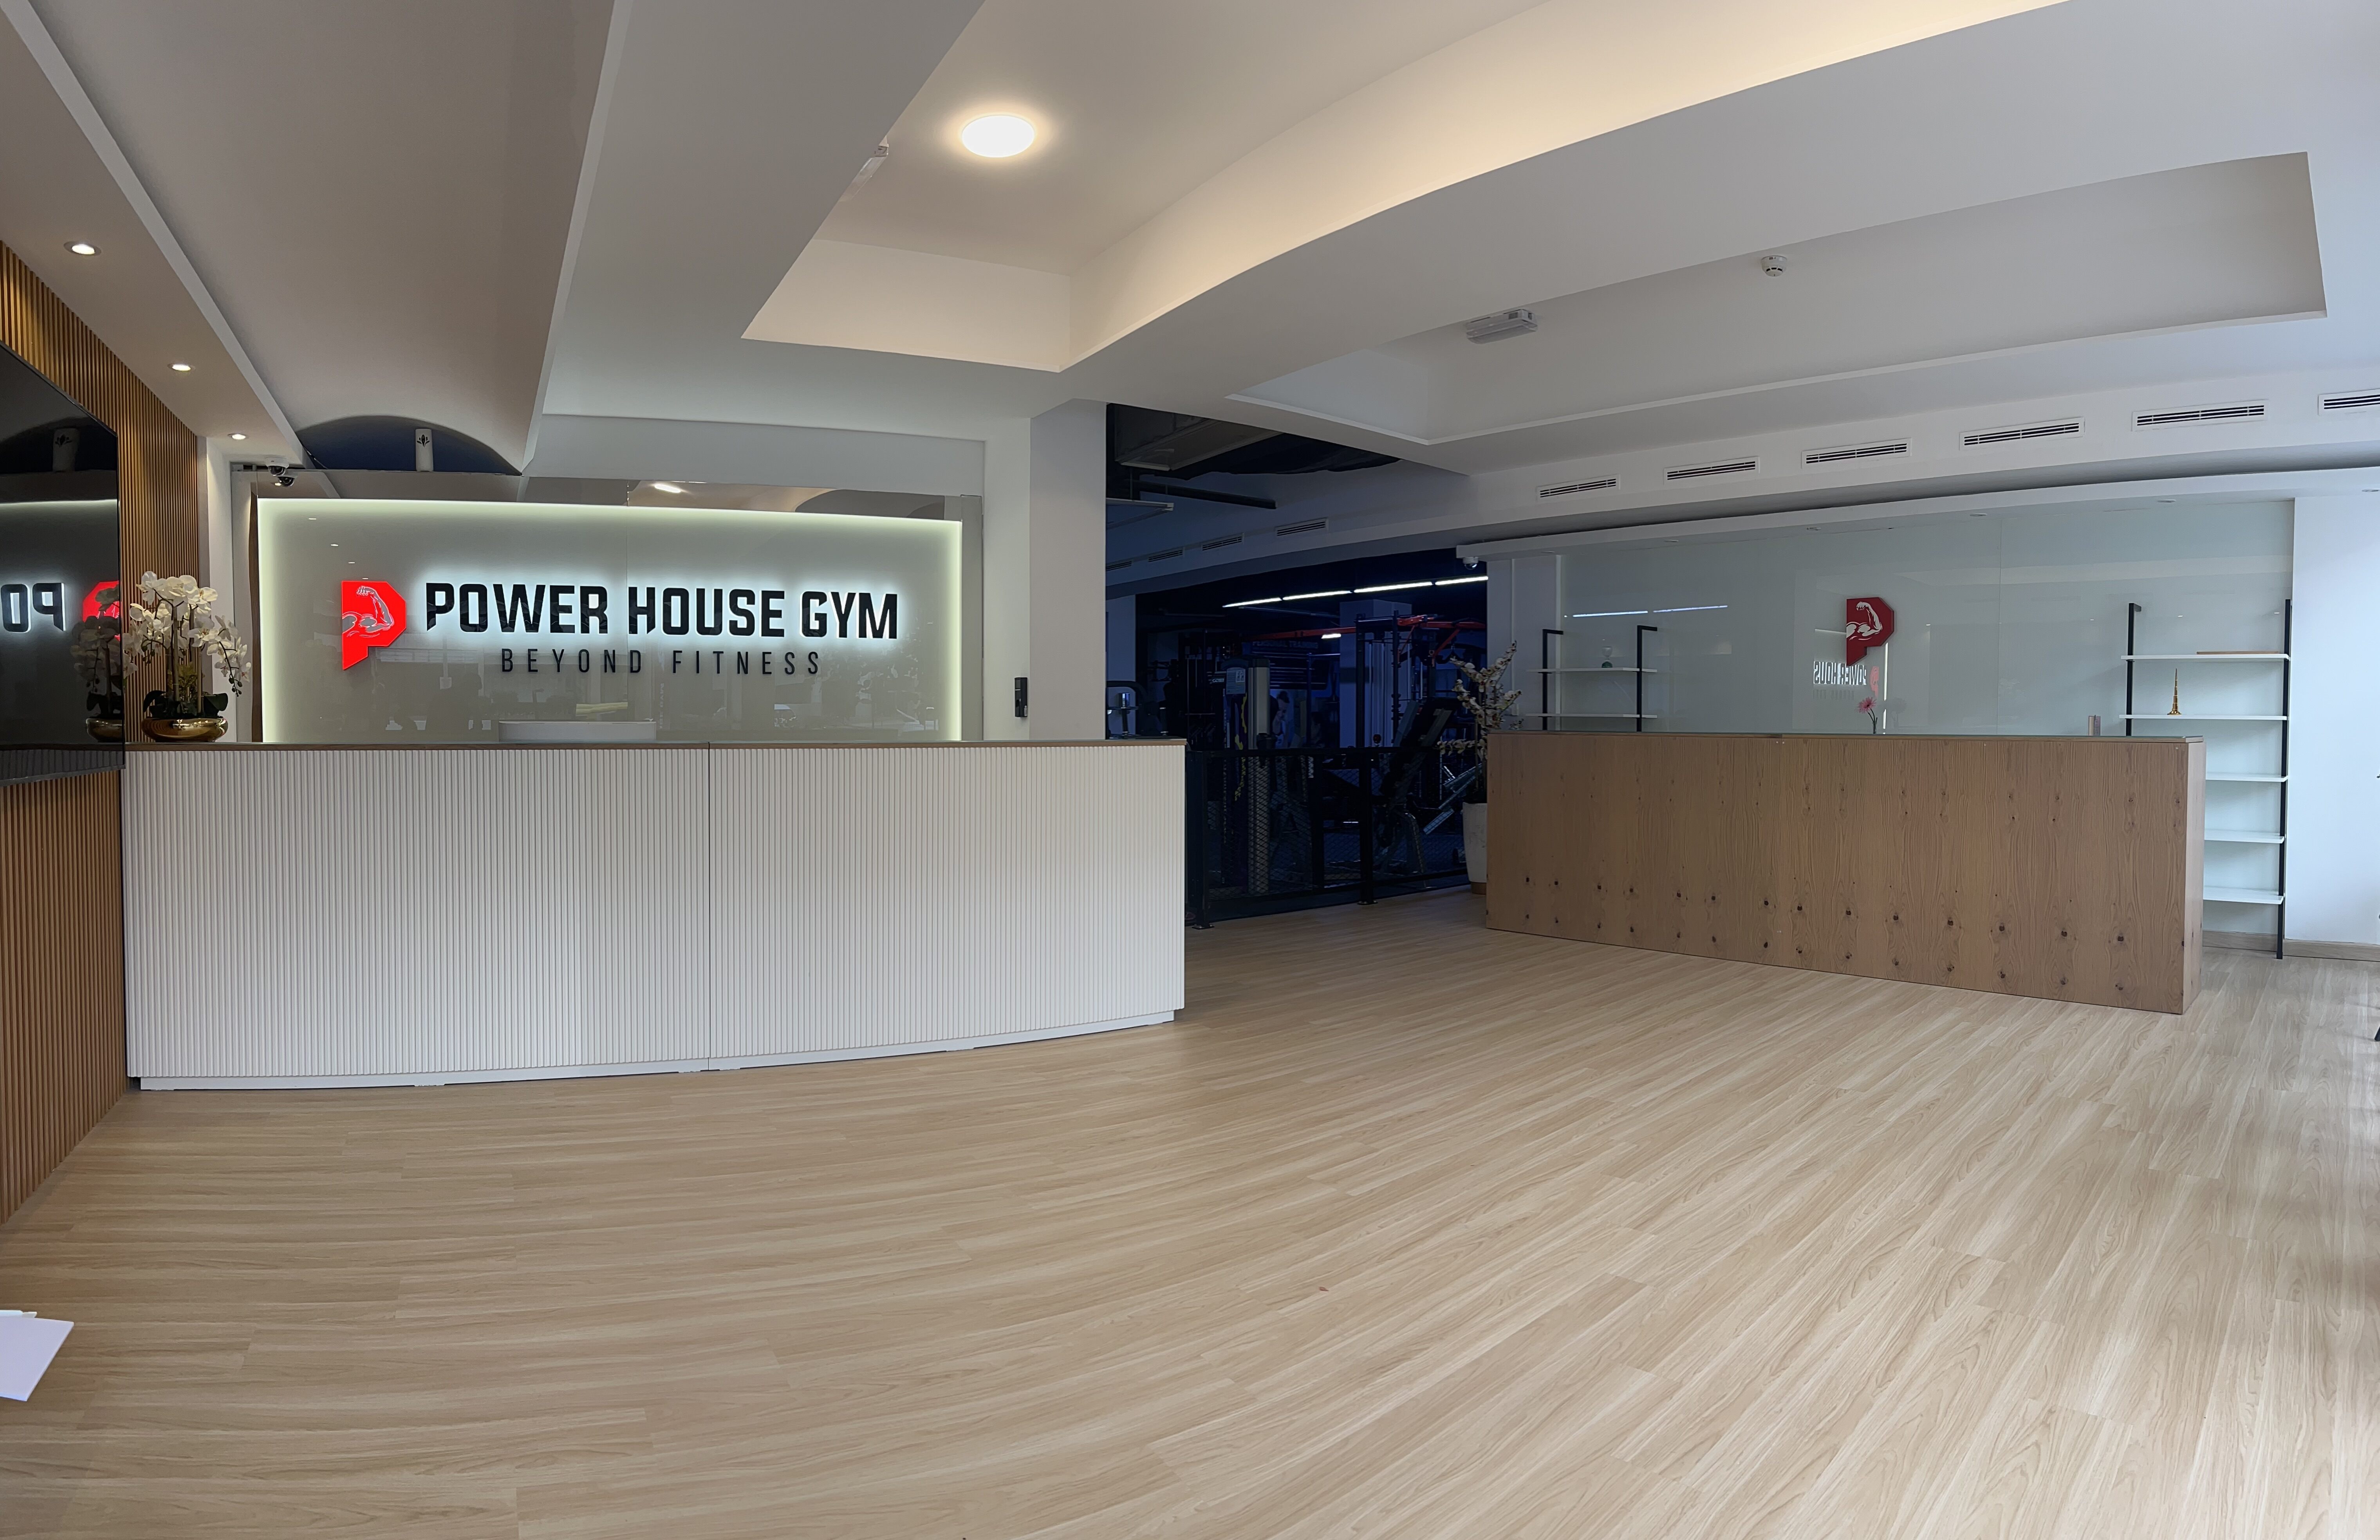 Img 7390 2000 - Power House Gym Dubai